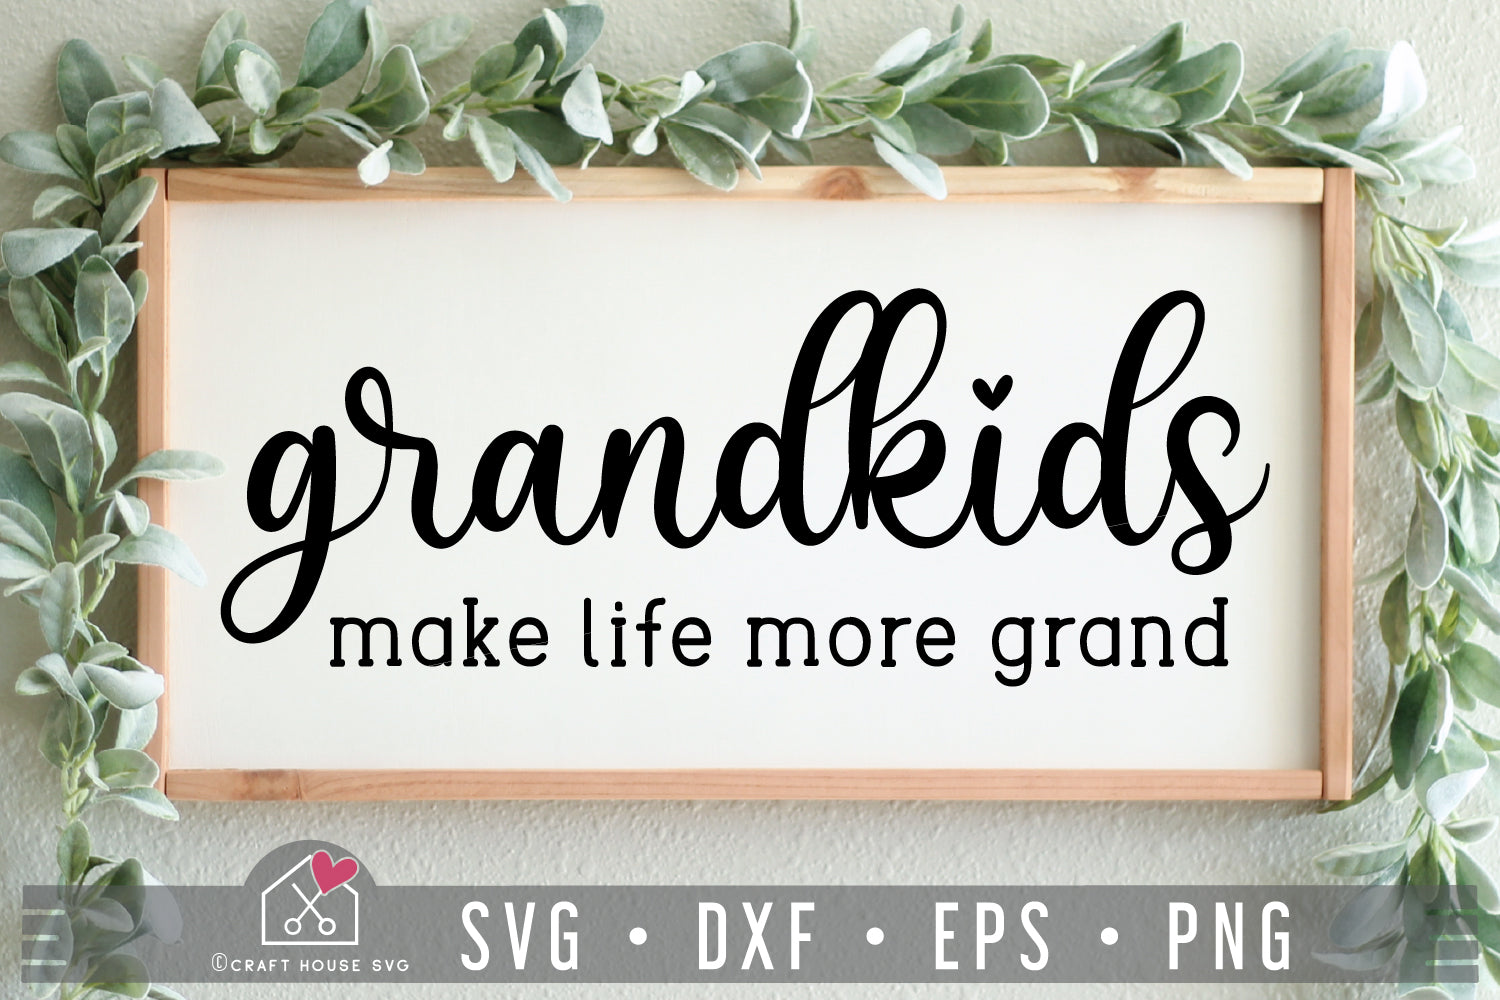 Grandkids make life more grand SVG Grandparents Sign Cut File